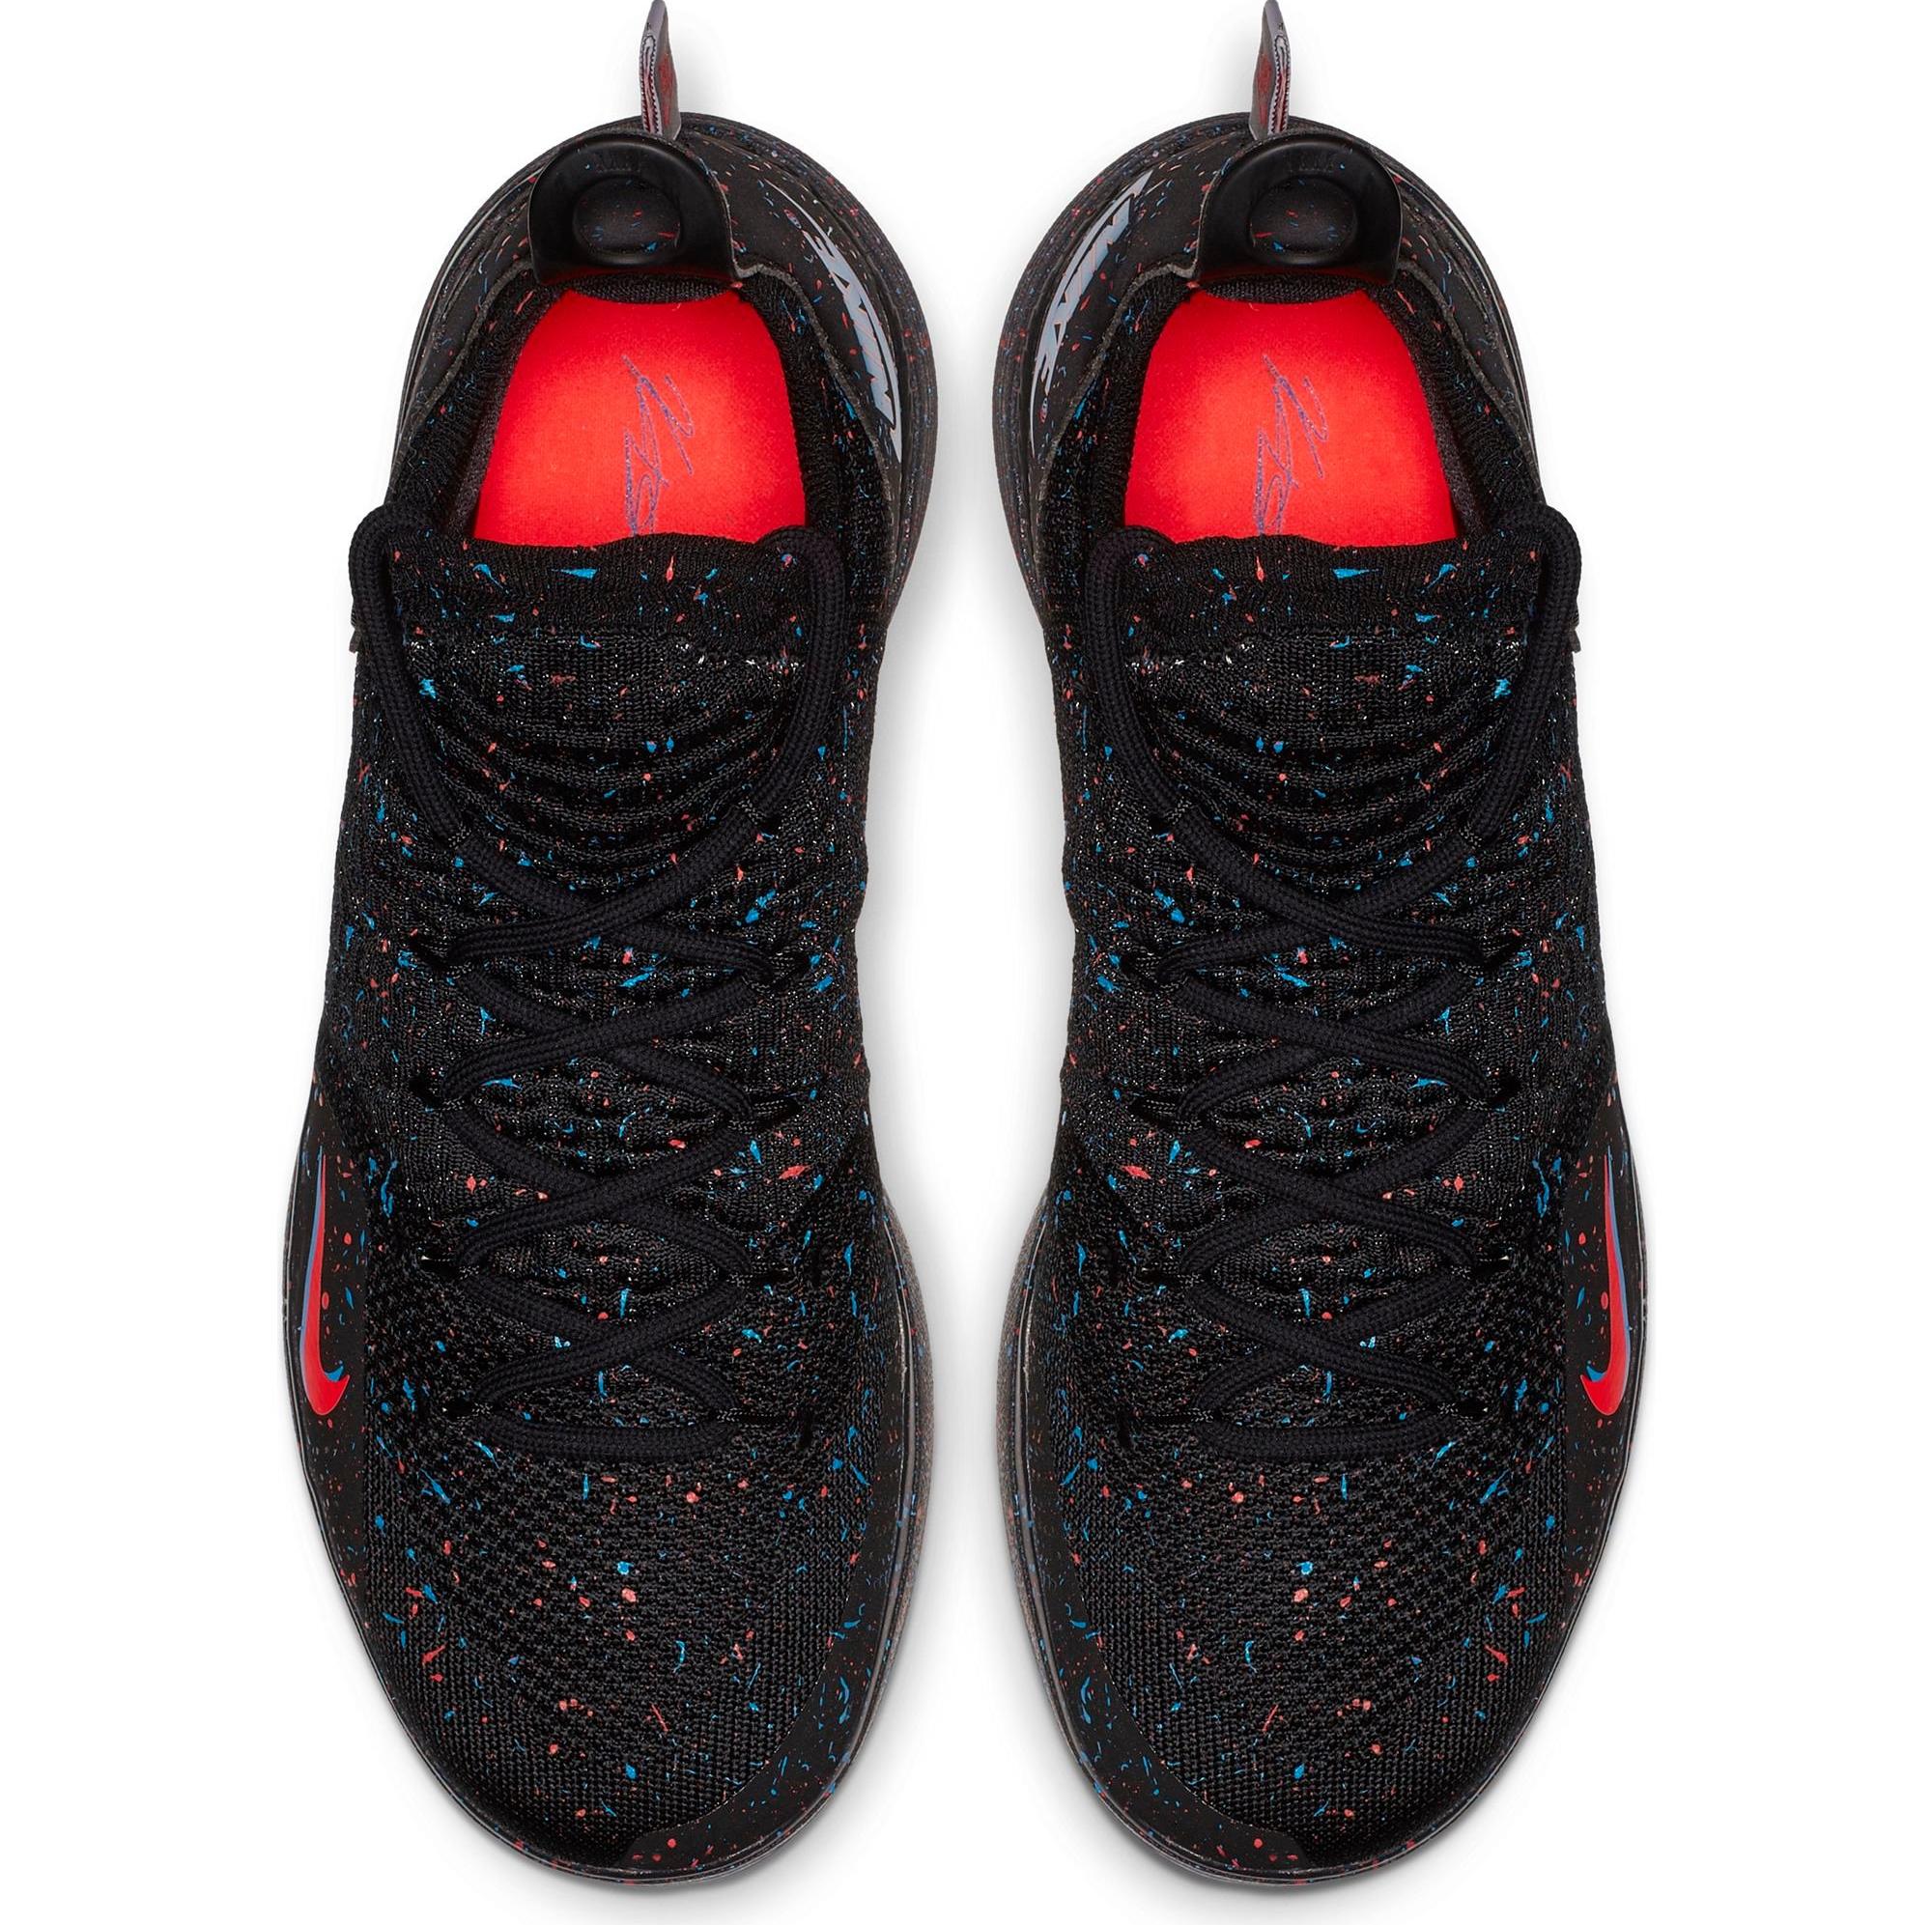 Sneakers Release – Nike KD 11 “Black/Crimson” Basketball Shoe